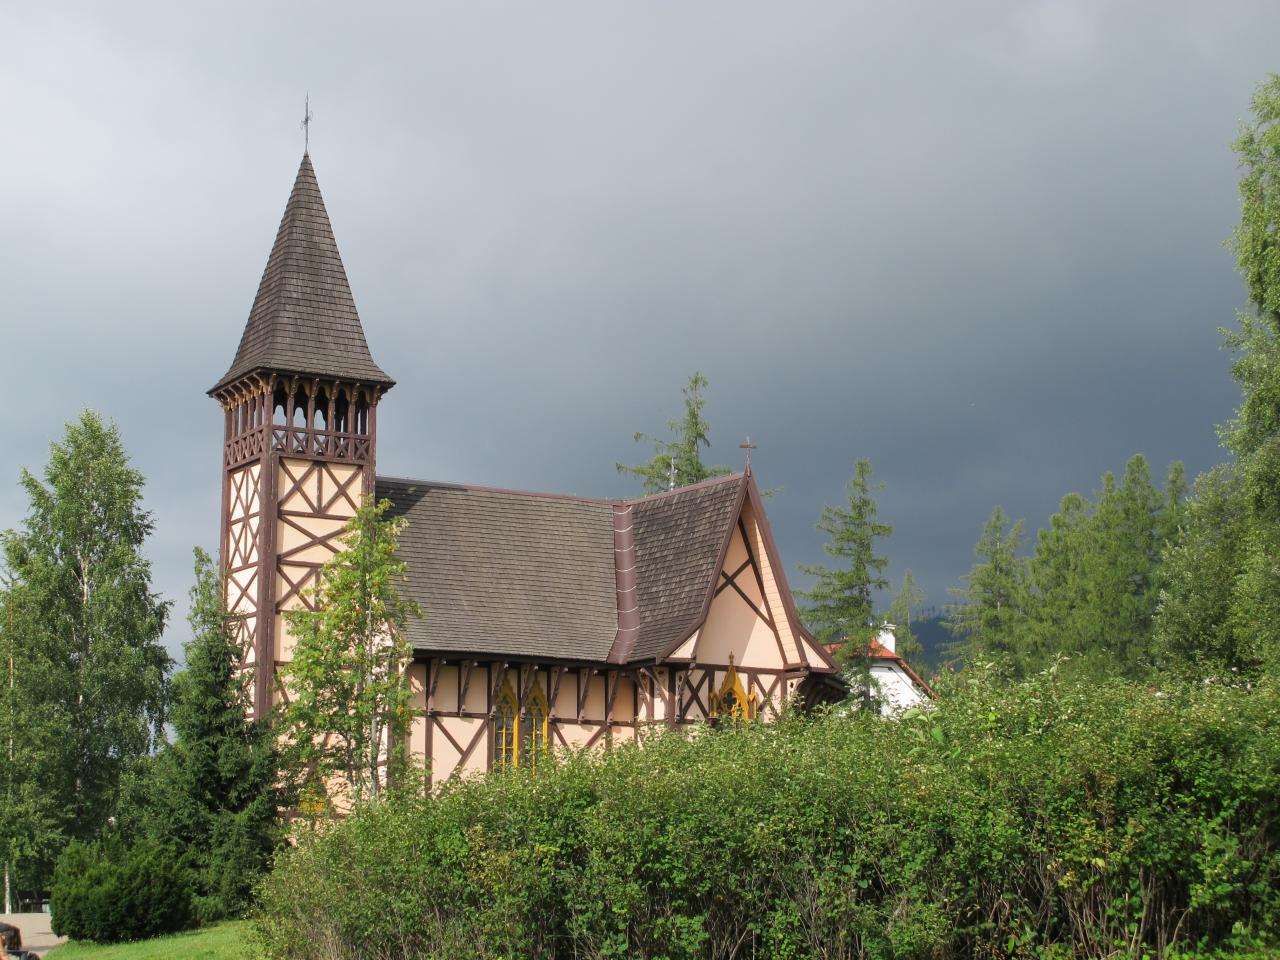 Hautes Tatras